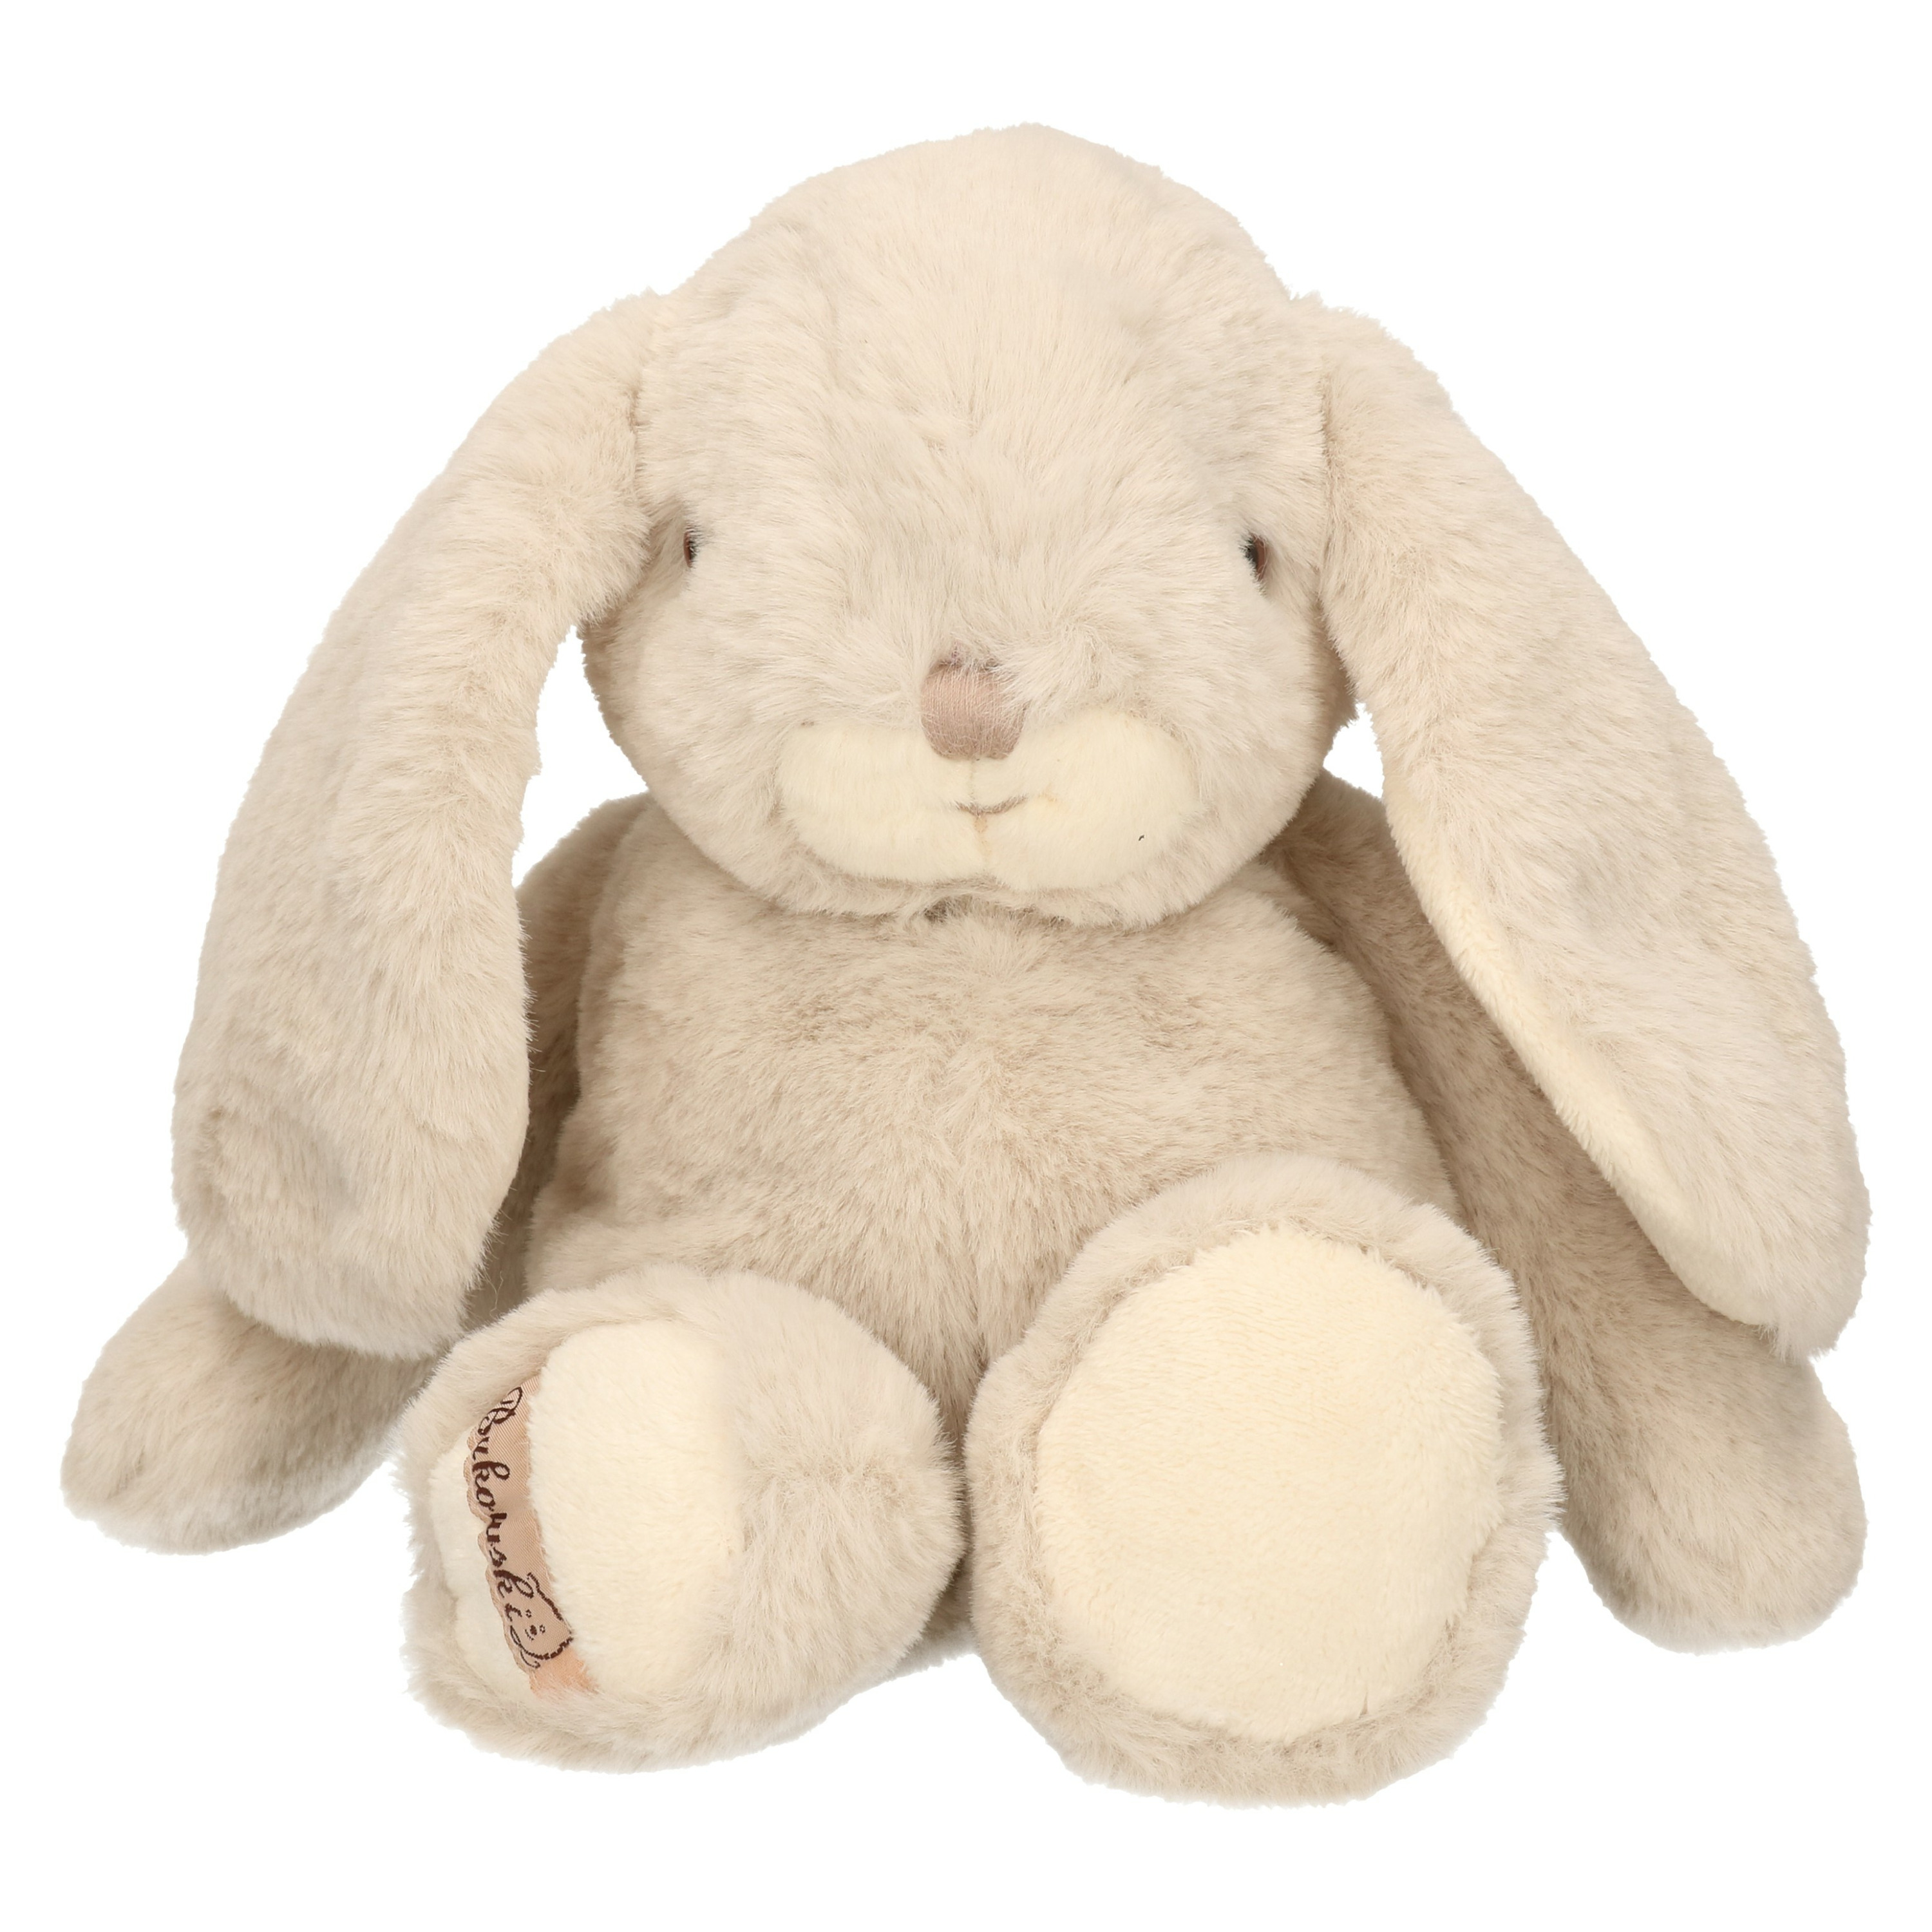 Bukowski pluche konijn knuffeldier lichtgrijs staand 25 cm luxe knuffels